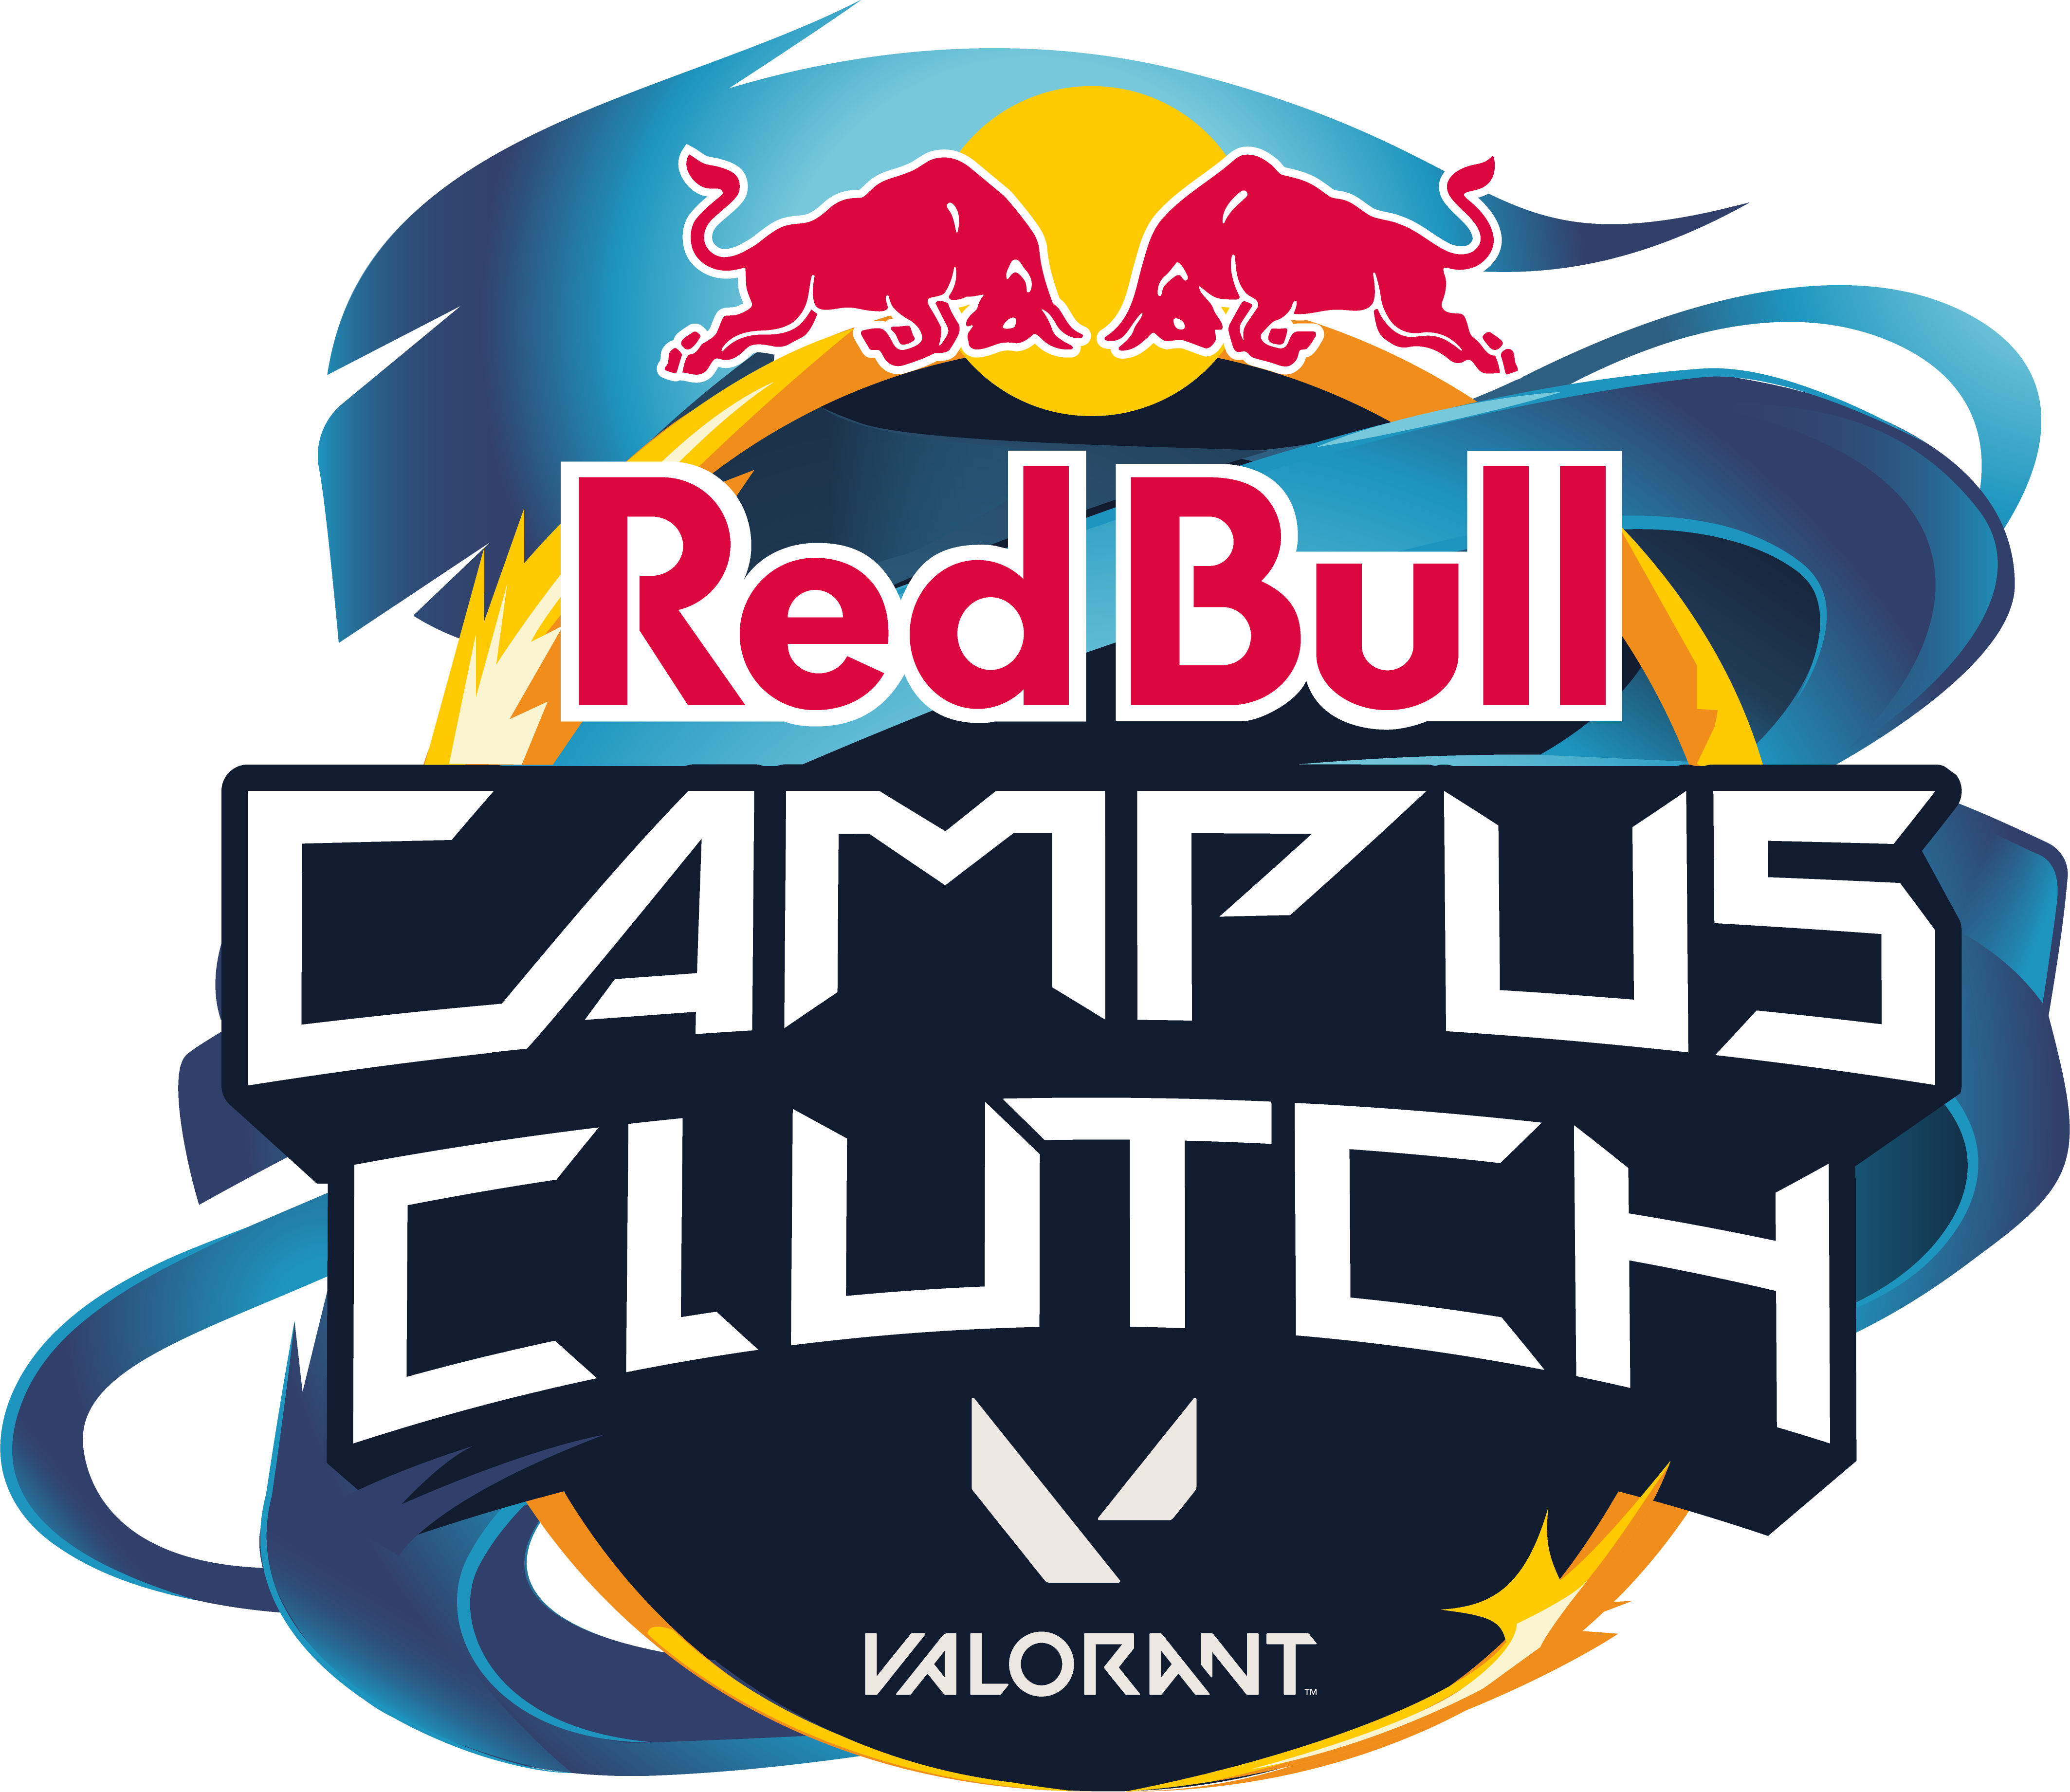 Red Bull Campus Clutch Logo ft Valorant 1